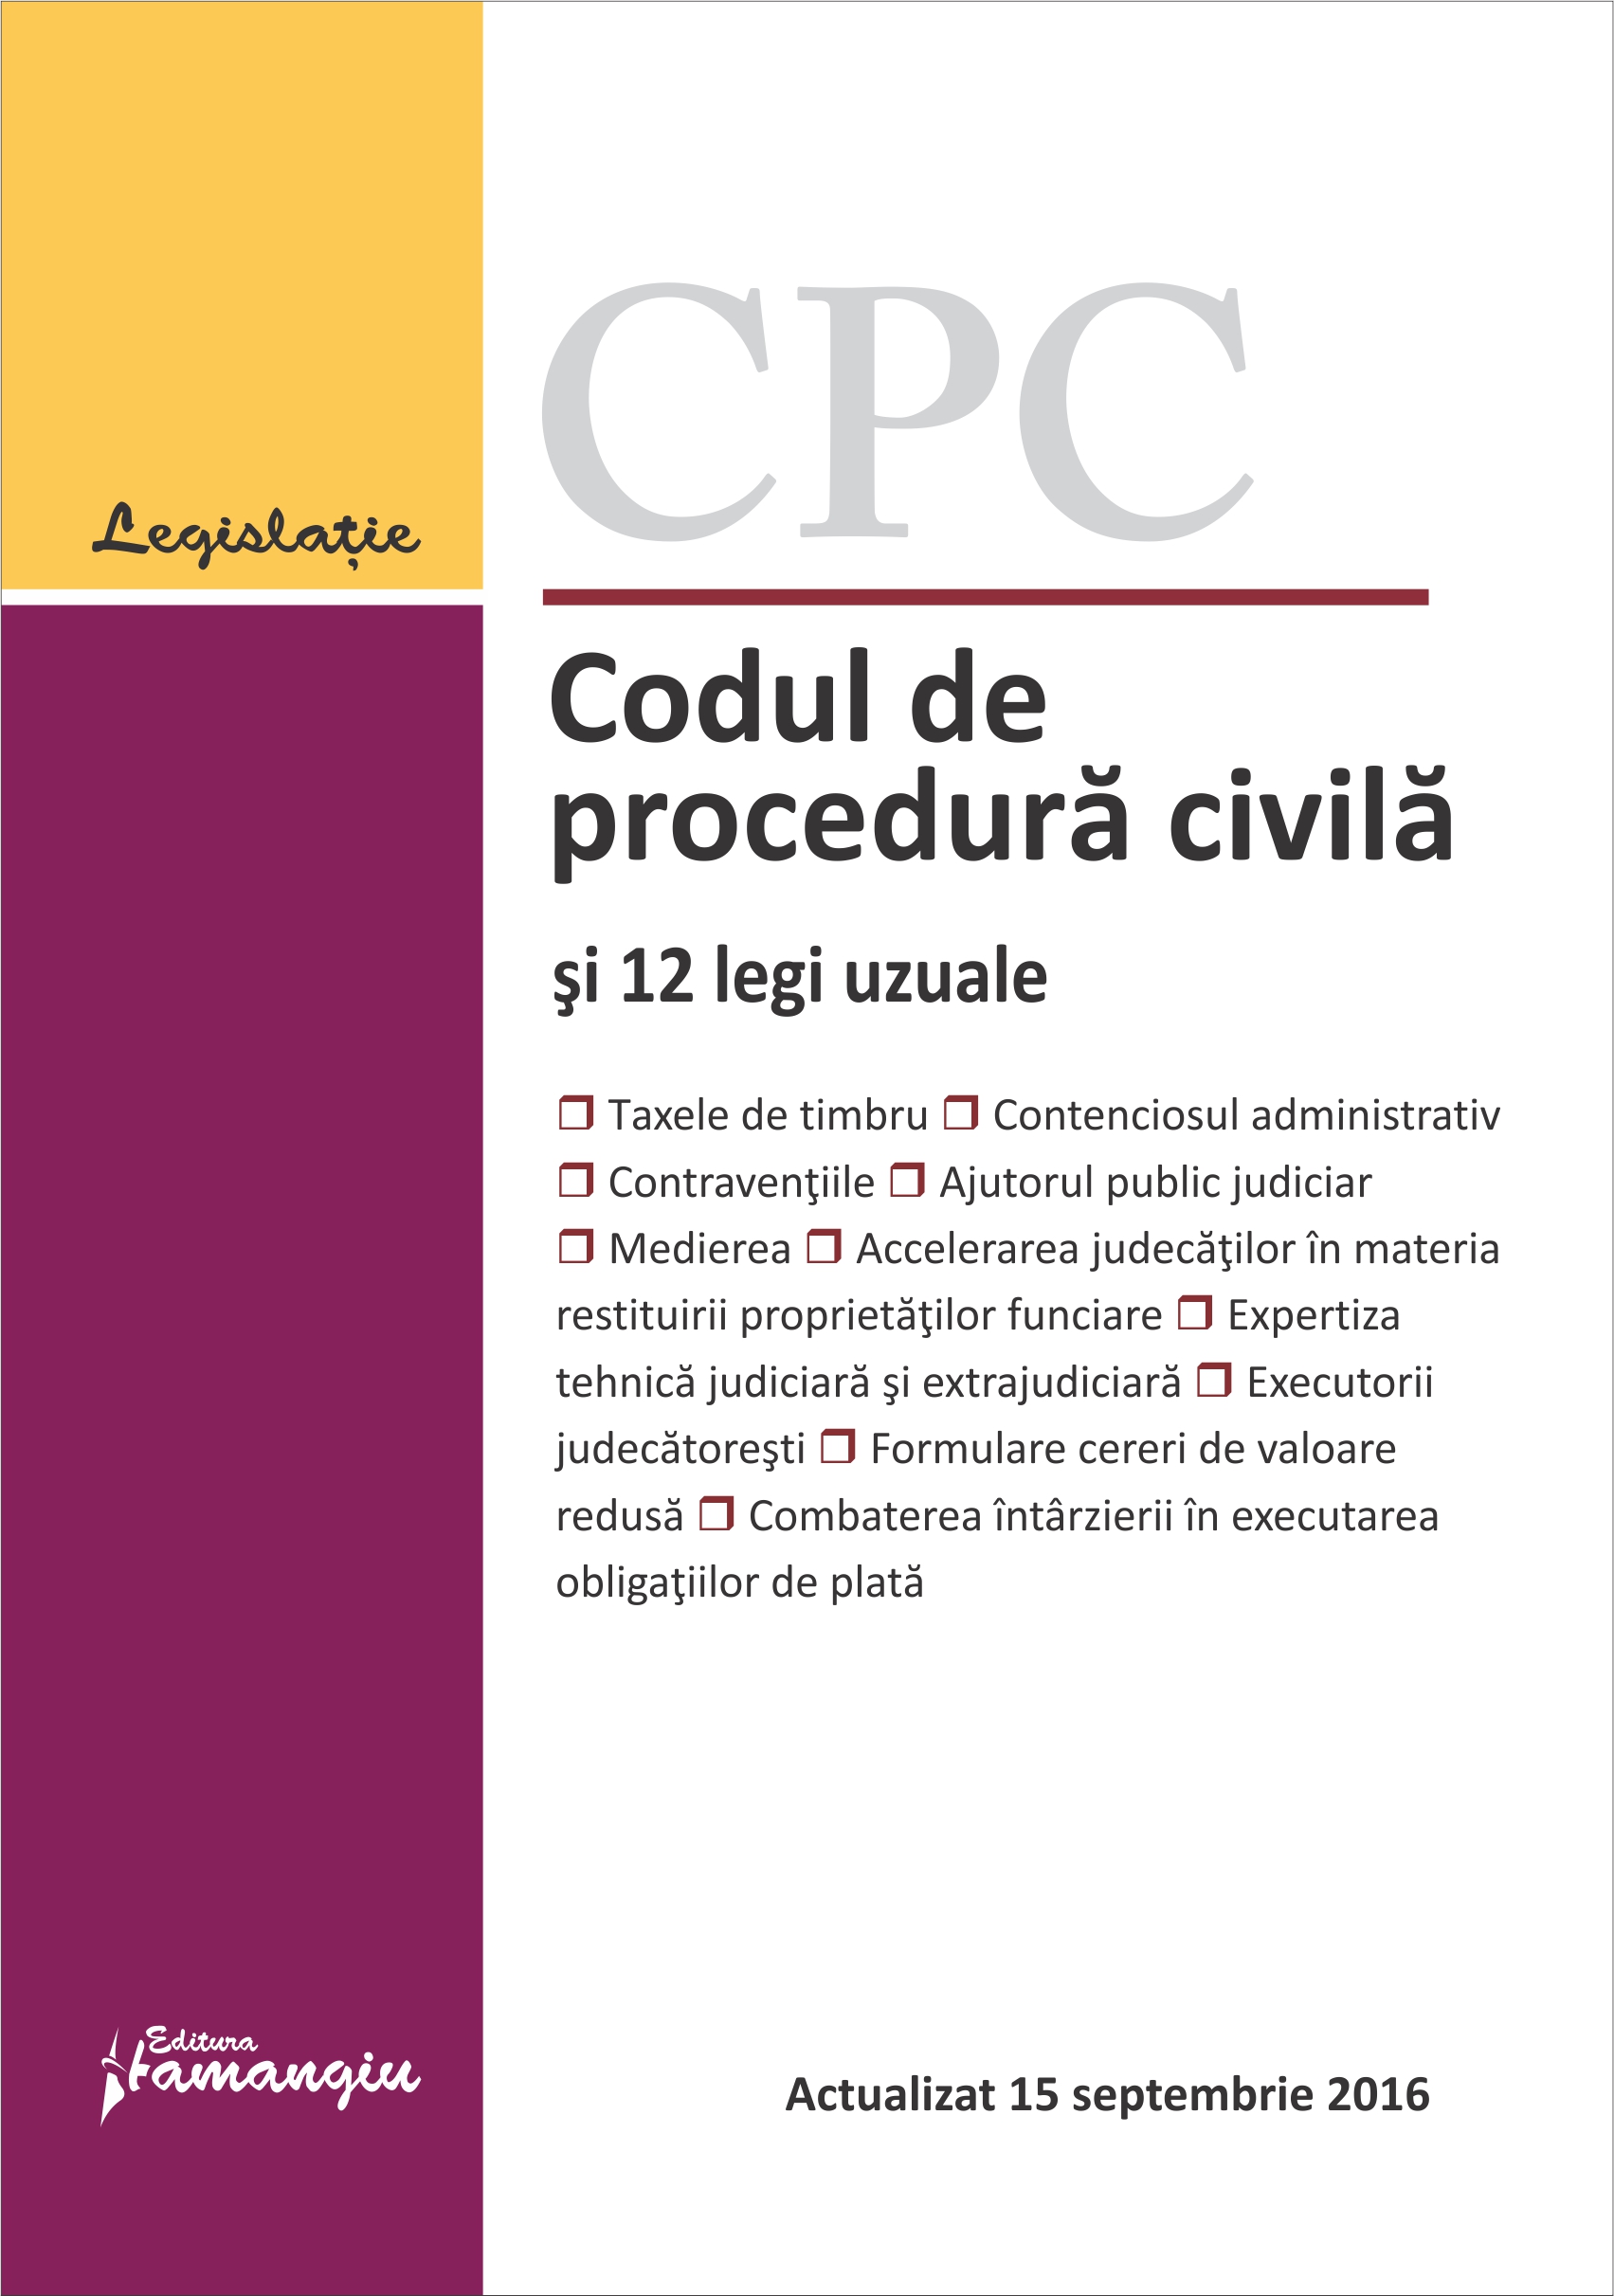 Codul de procedura civila si 12 legi uzuale act. 15 septembrie 2016